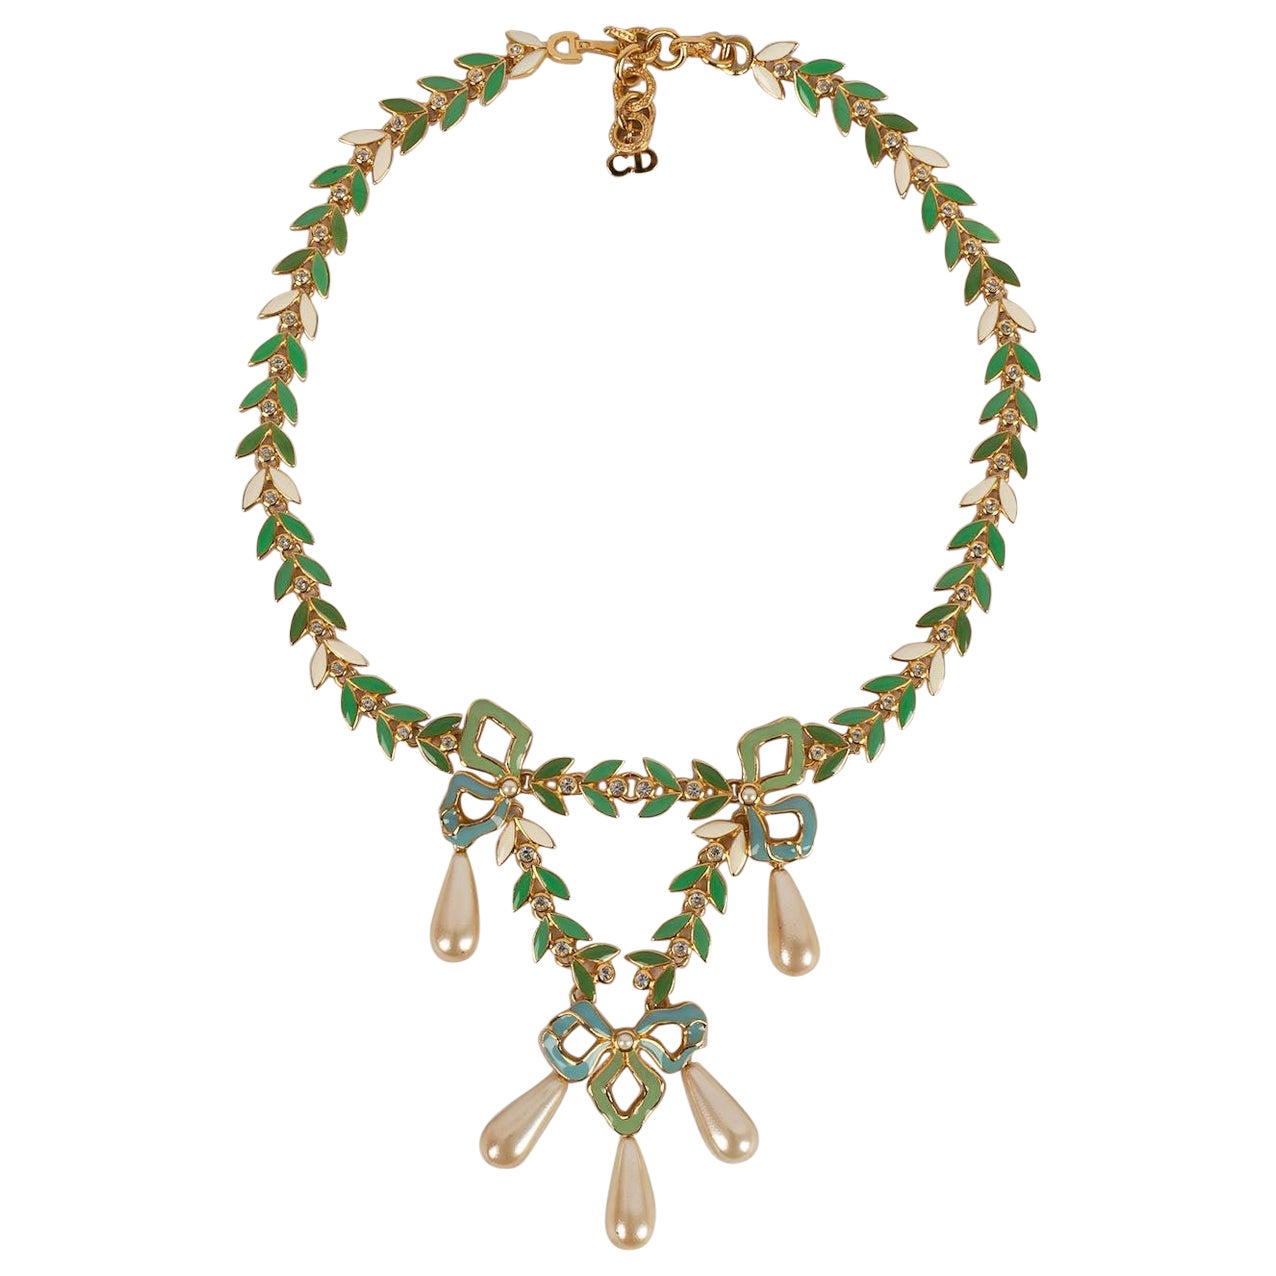 Christian Dior Golden Metal Necklace, 2001